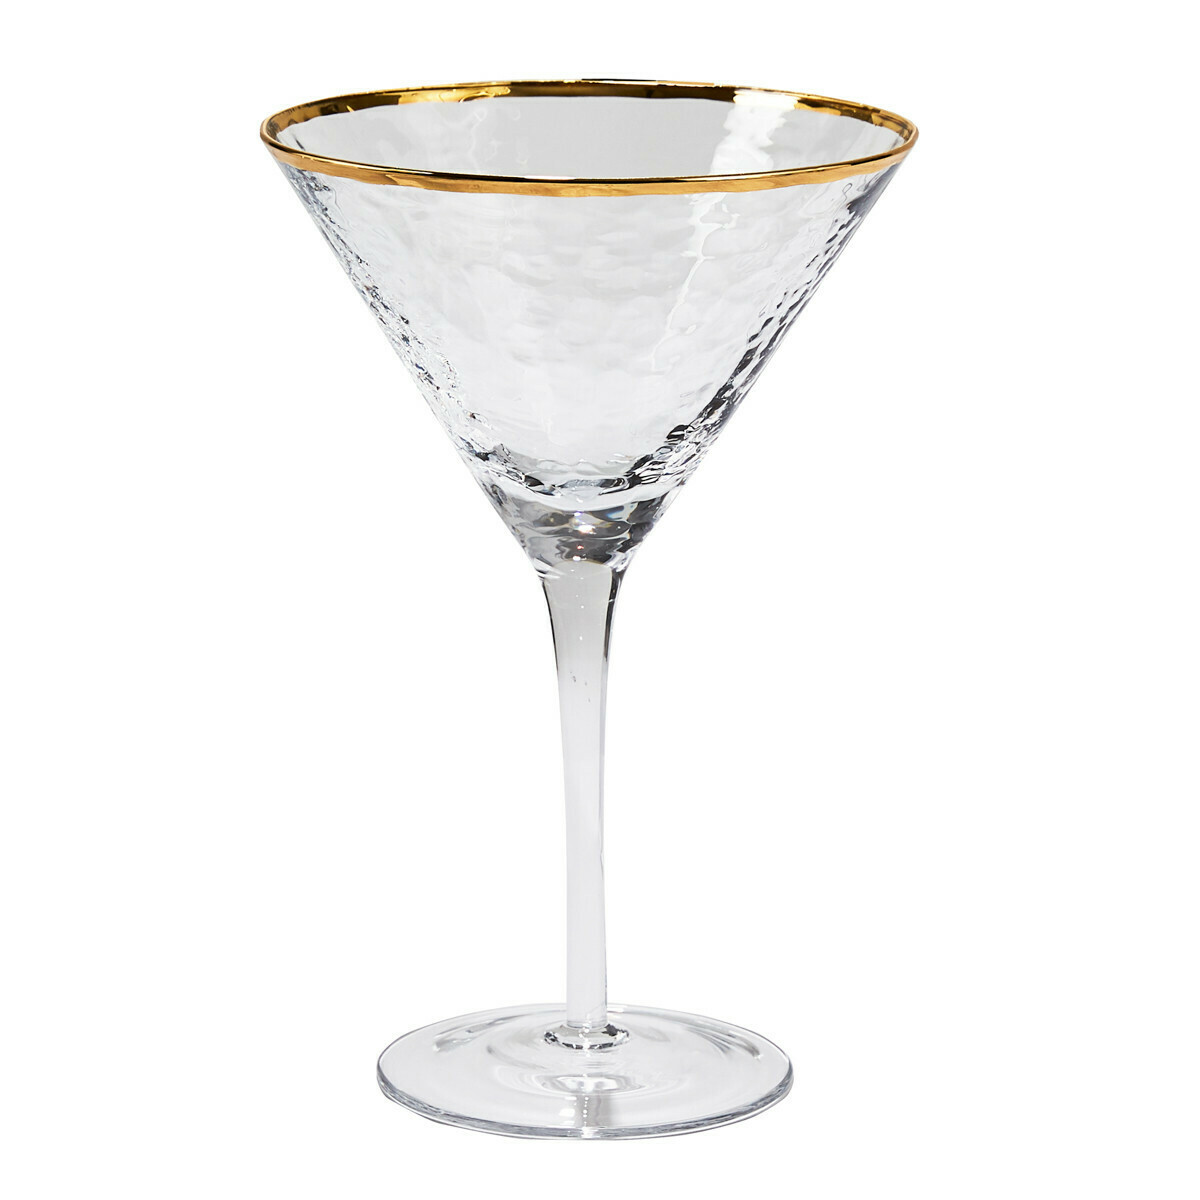 Gold Metallic Rim Martini Glass